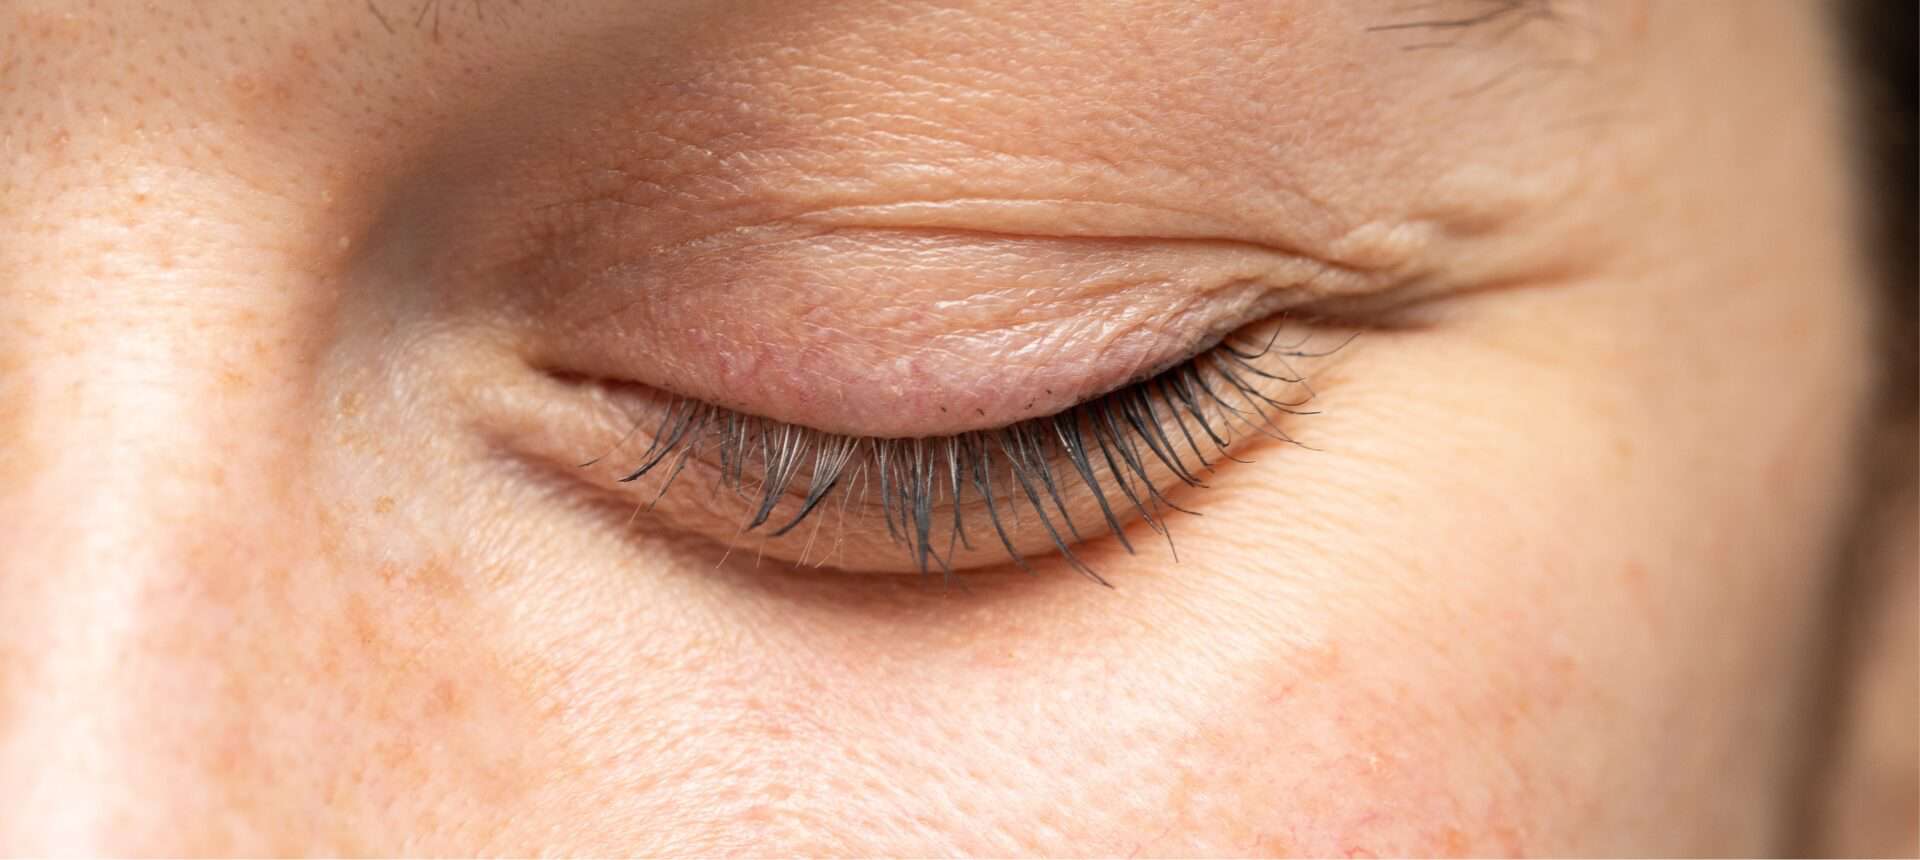 Closed eye showing eyelid relating to Oculoplastics (eyelid surgery) at Sapphire Eye Care